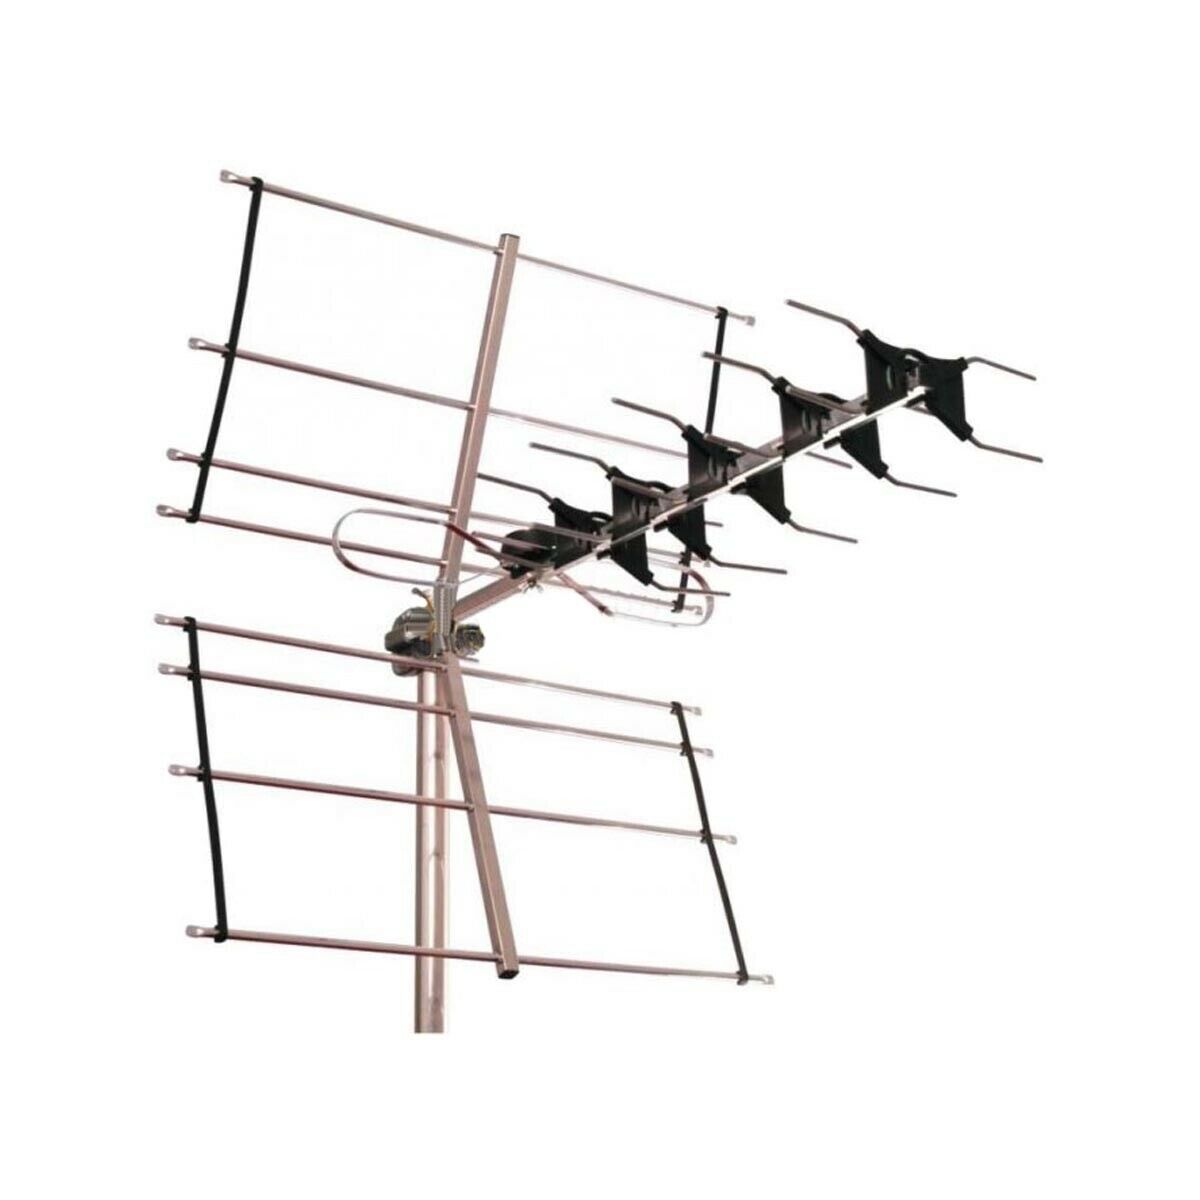 Saorview UHF TV Aerial Kit